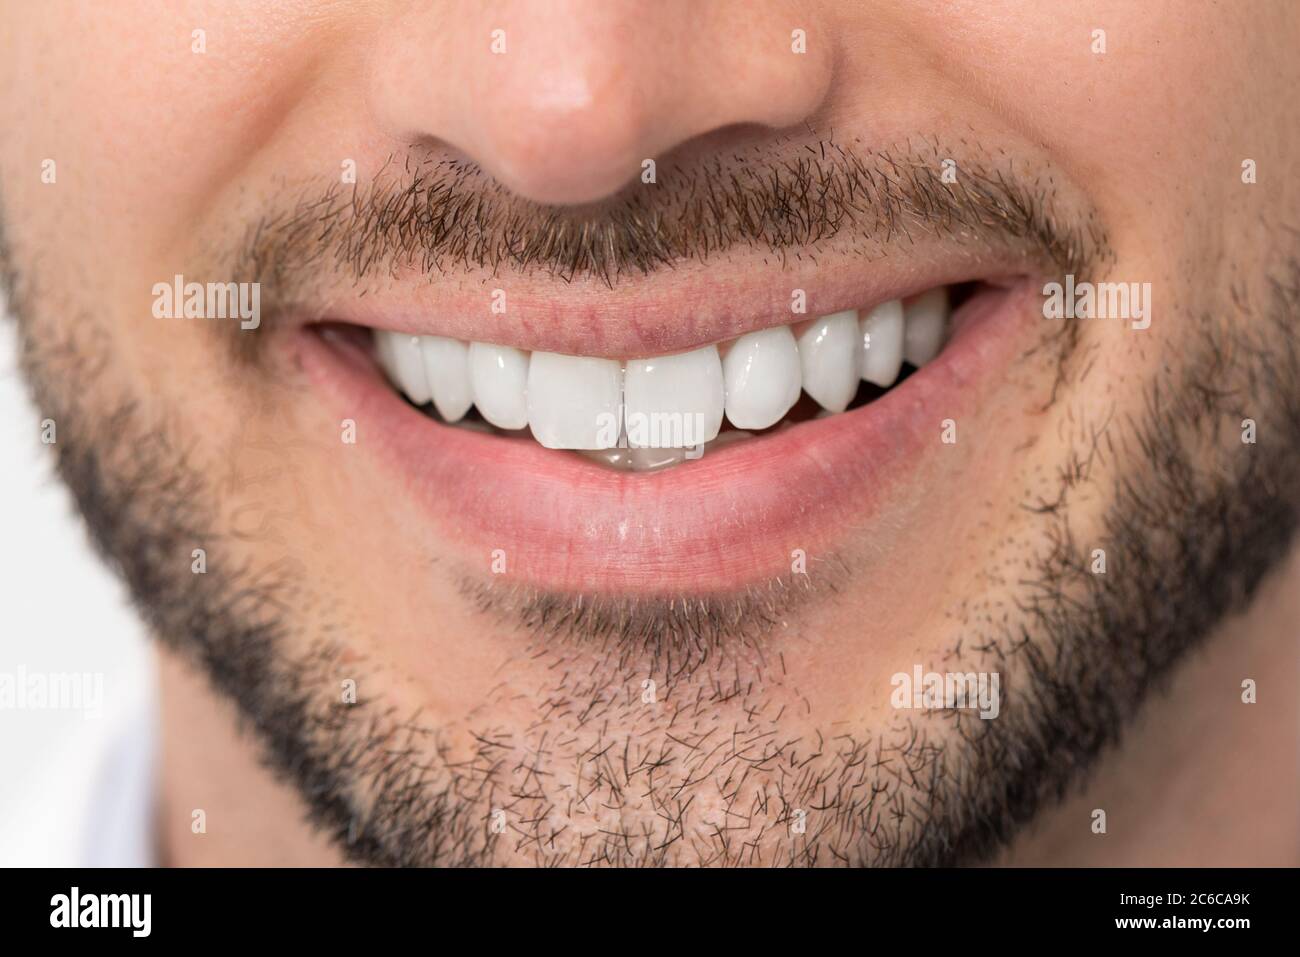 Mann mit perfektem Lächeln. Zahnaufhellung, Zahnpflege Konzept Stockfoto